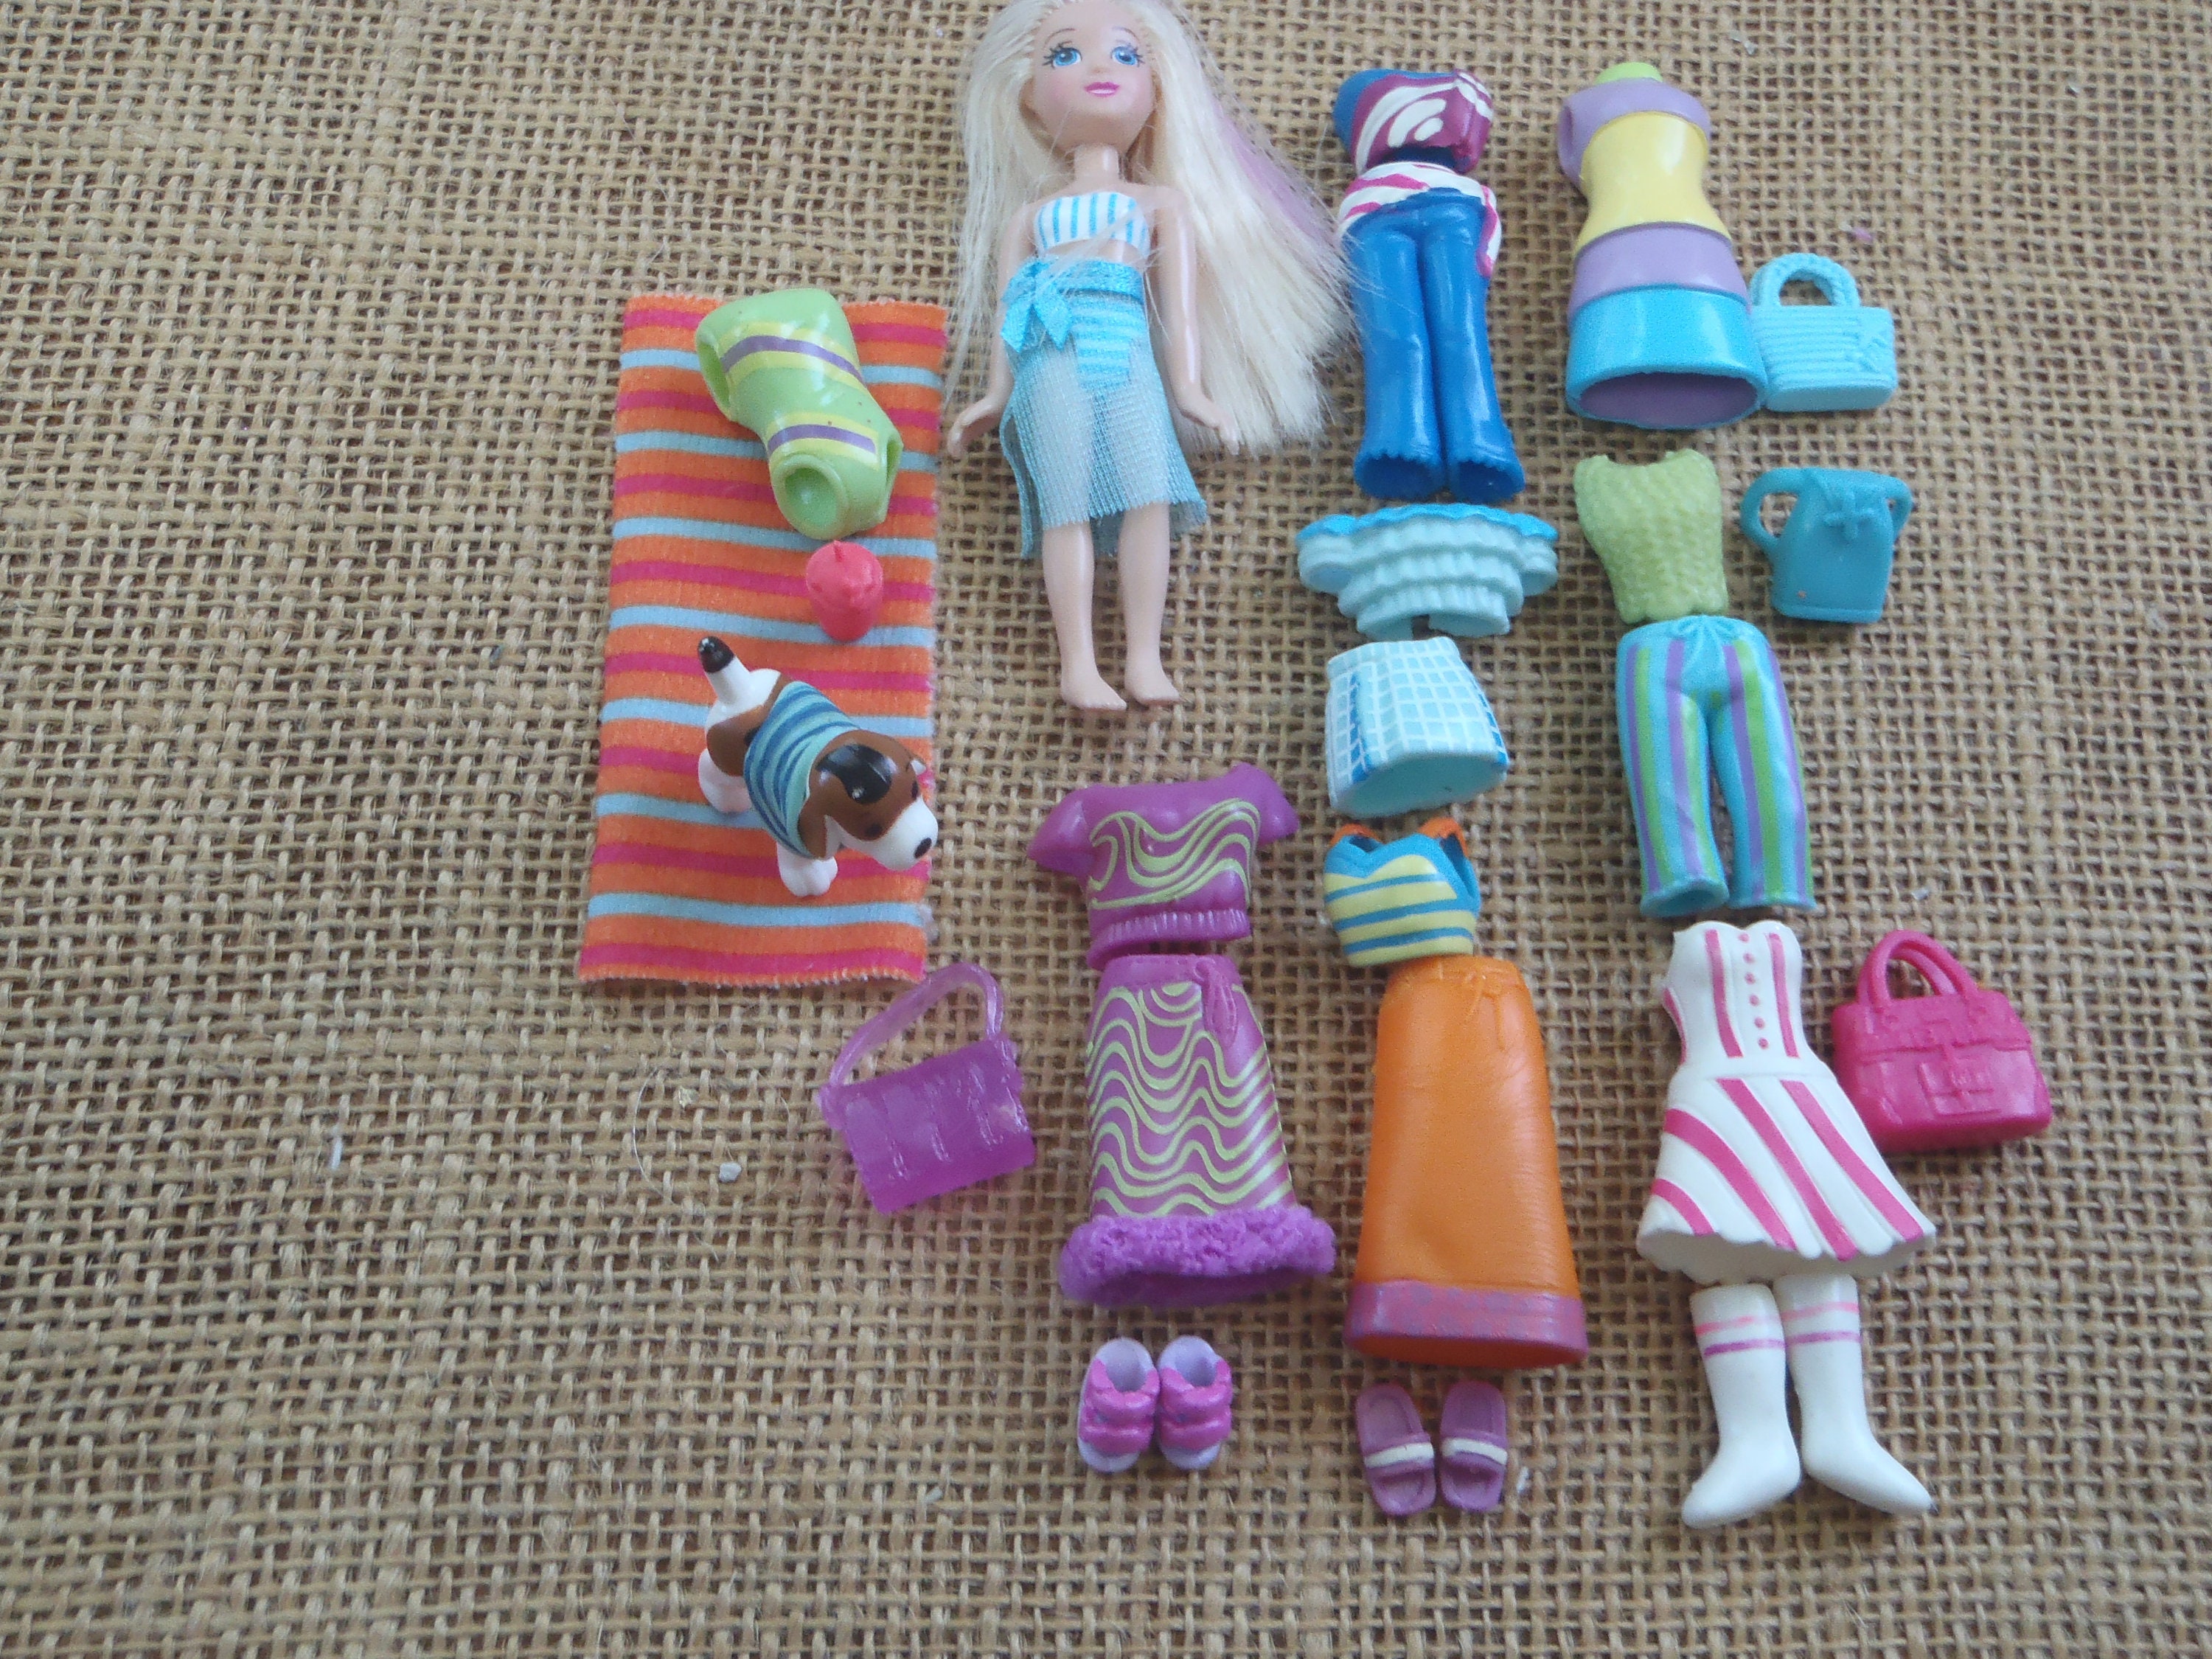 Fashion Polly Pocket Doll Figures Friends set